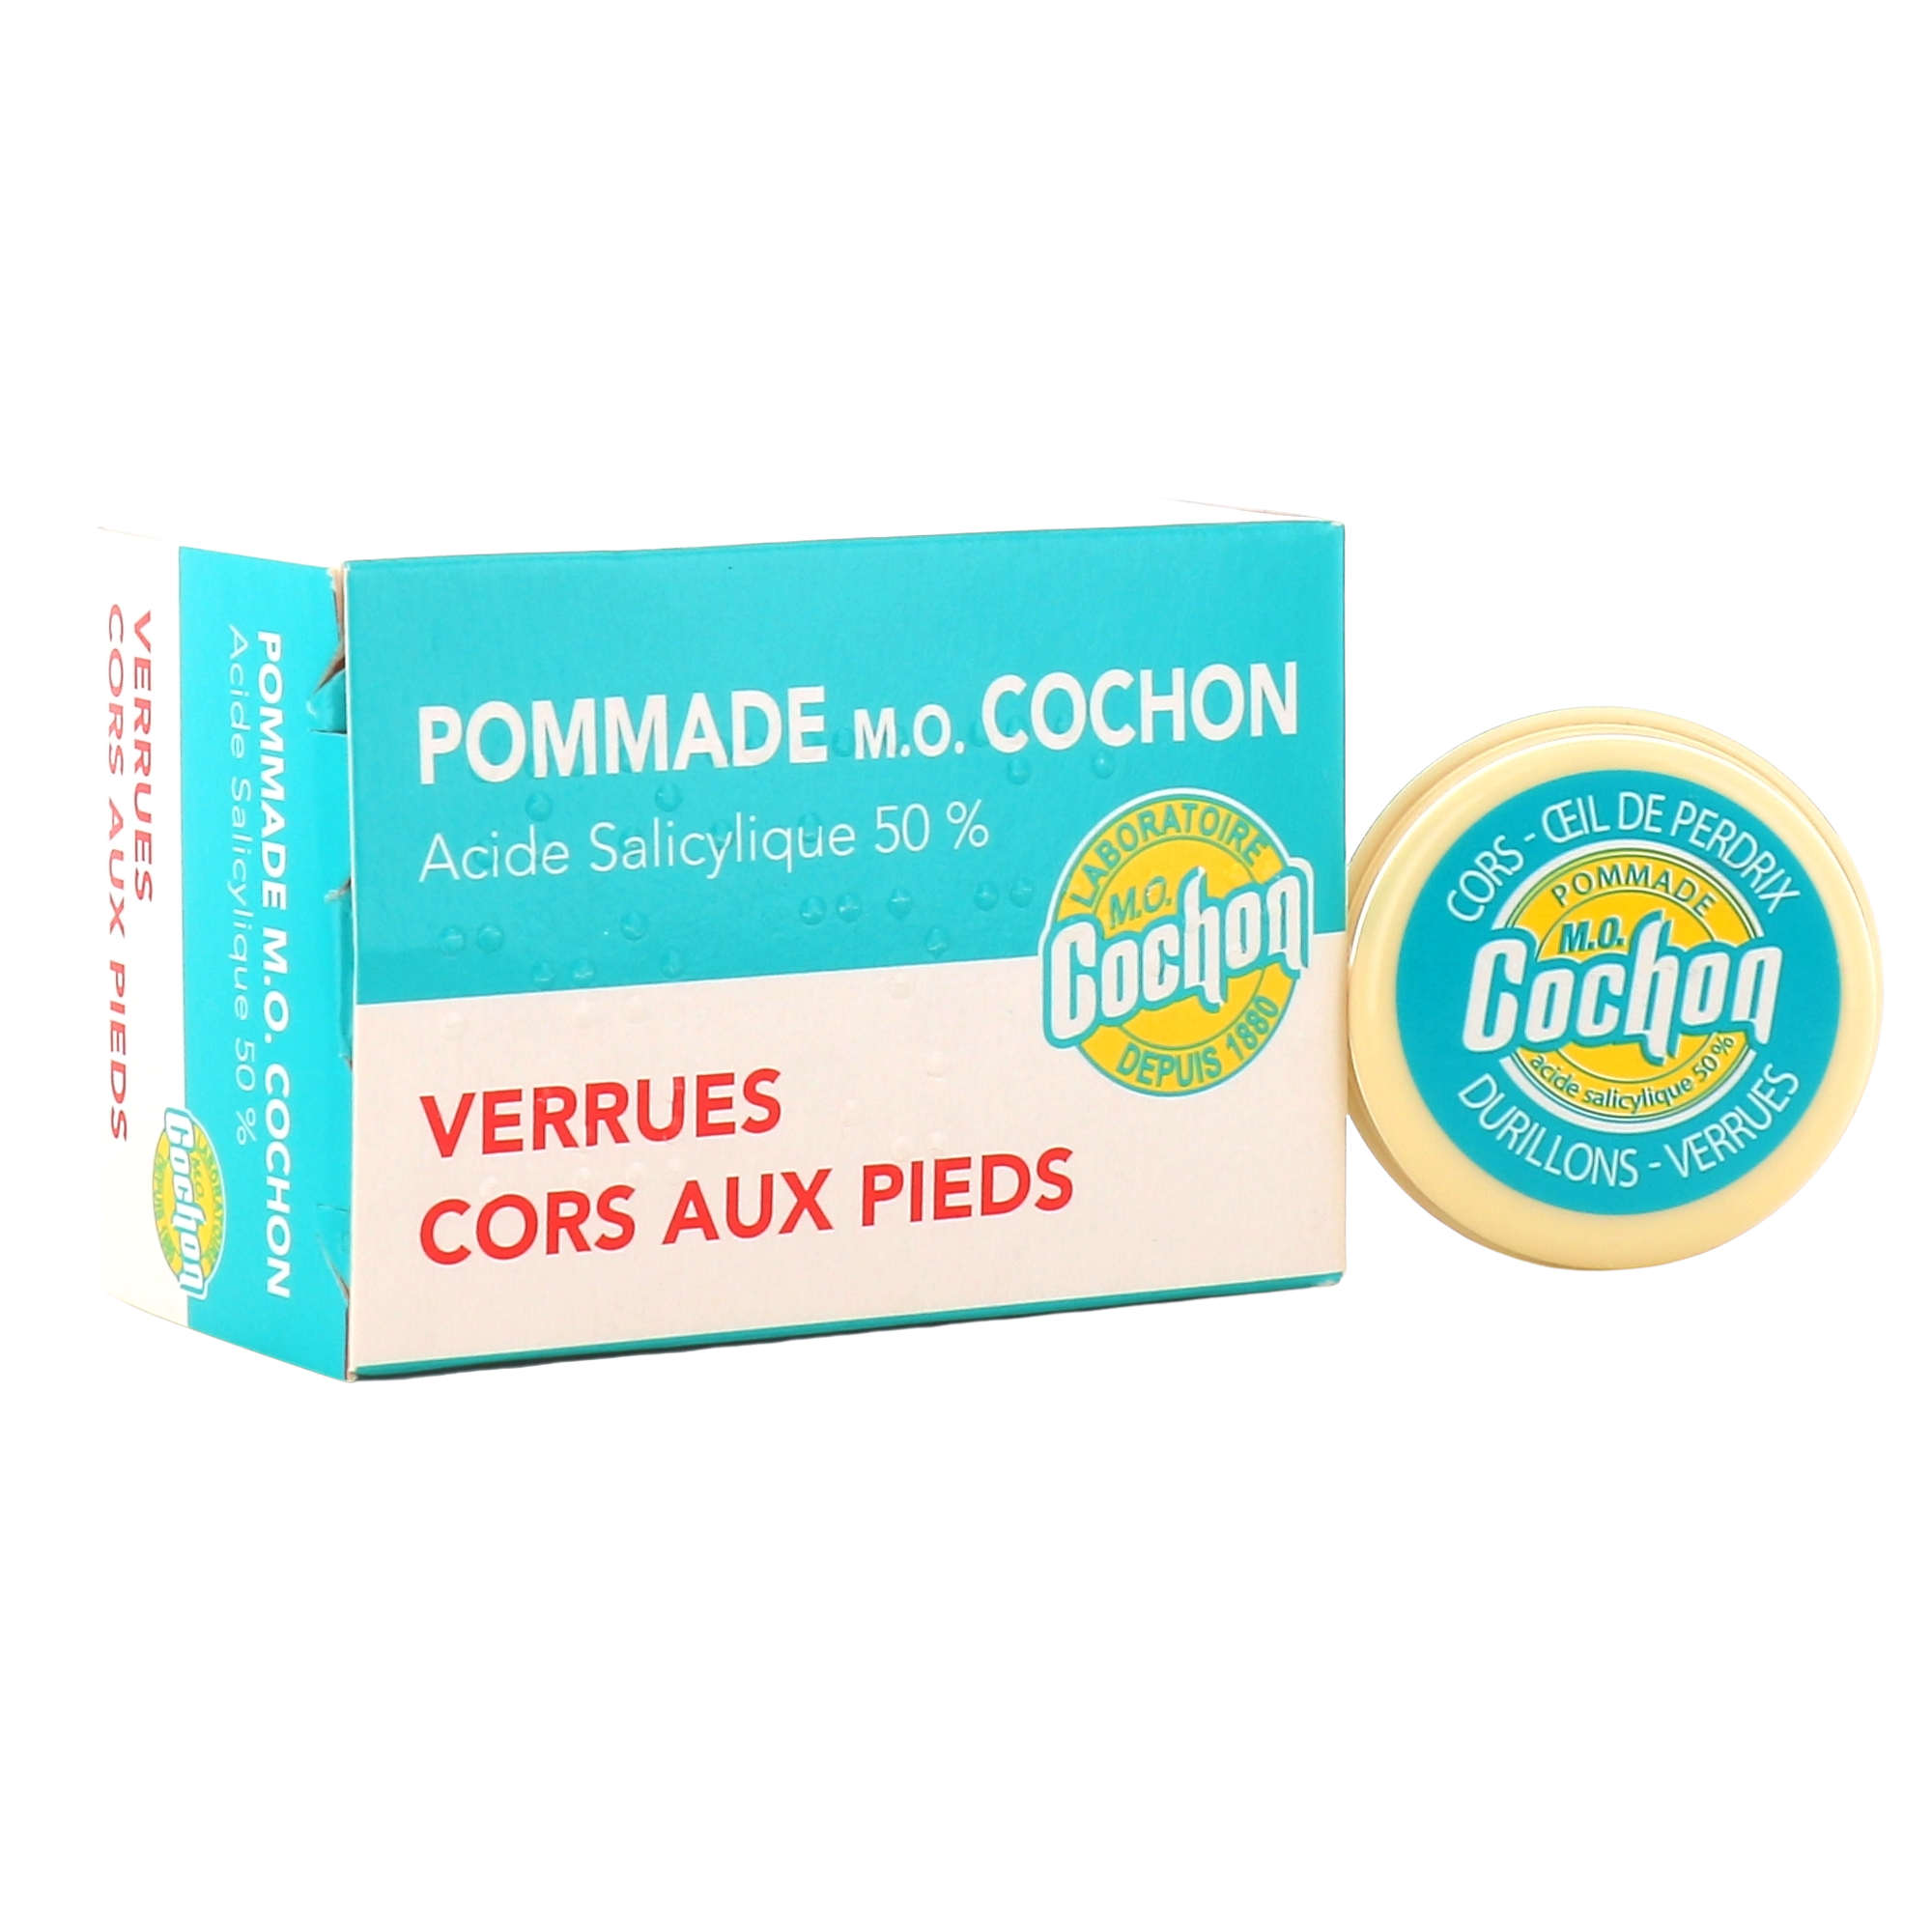 https://cdn.pharmaciedesdrakkars.com/media/images/products/pommade-m-o-cochon-verrues-cors-aux-pieds-tradiphar5-1675784630.jpg